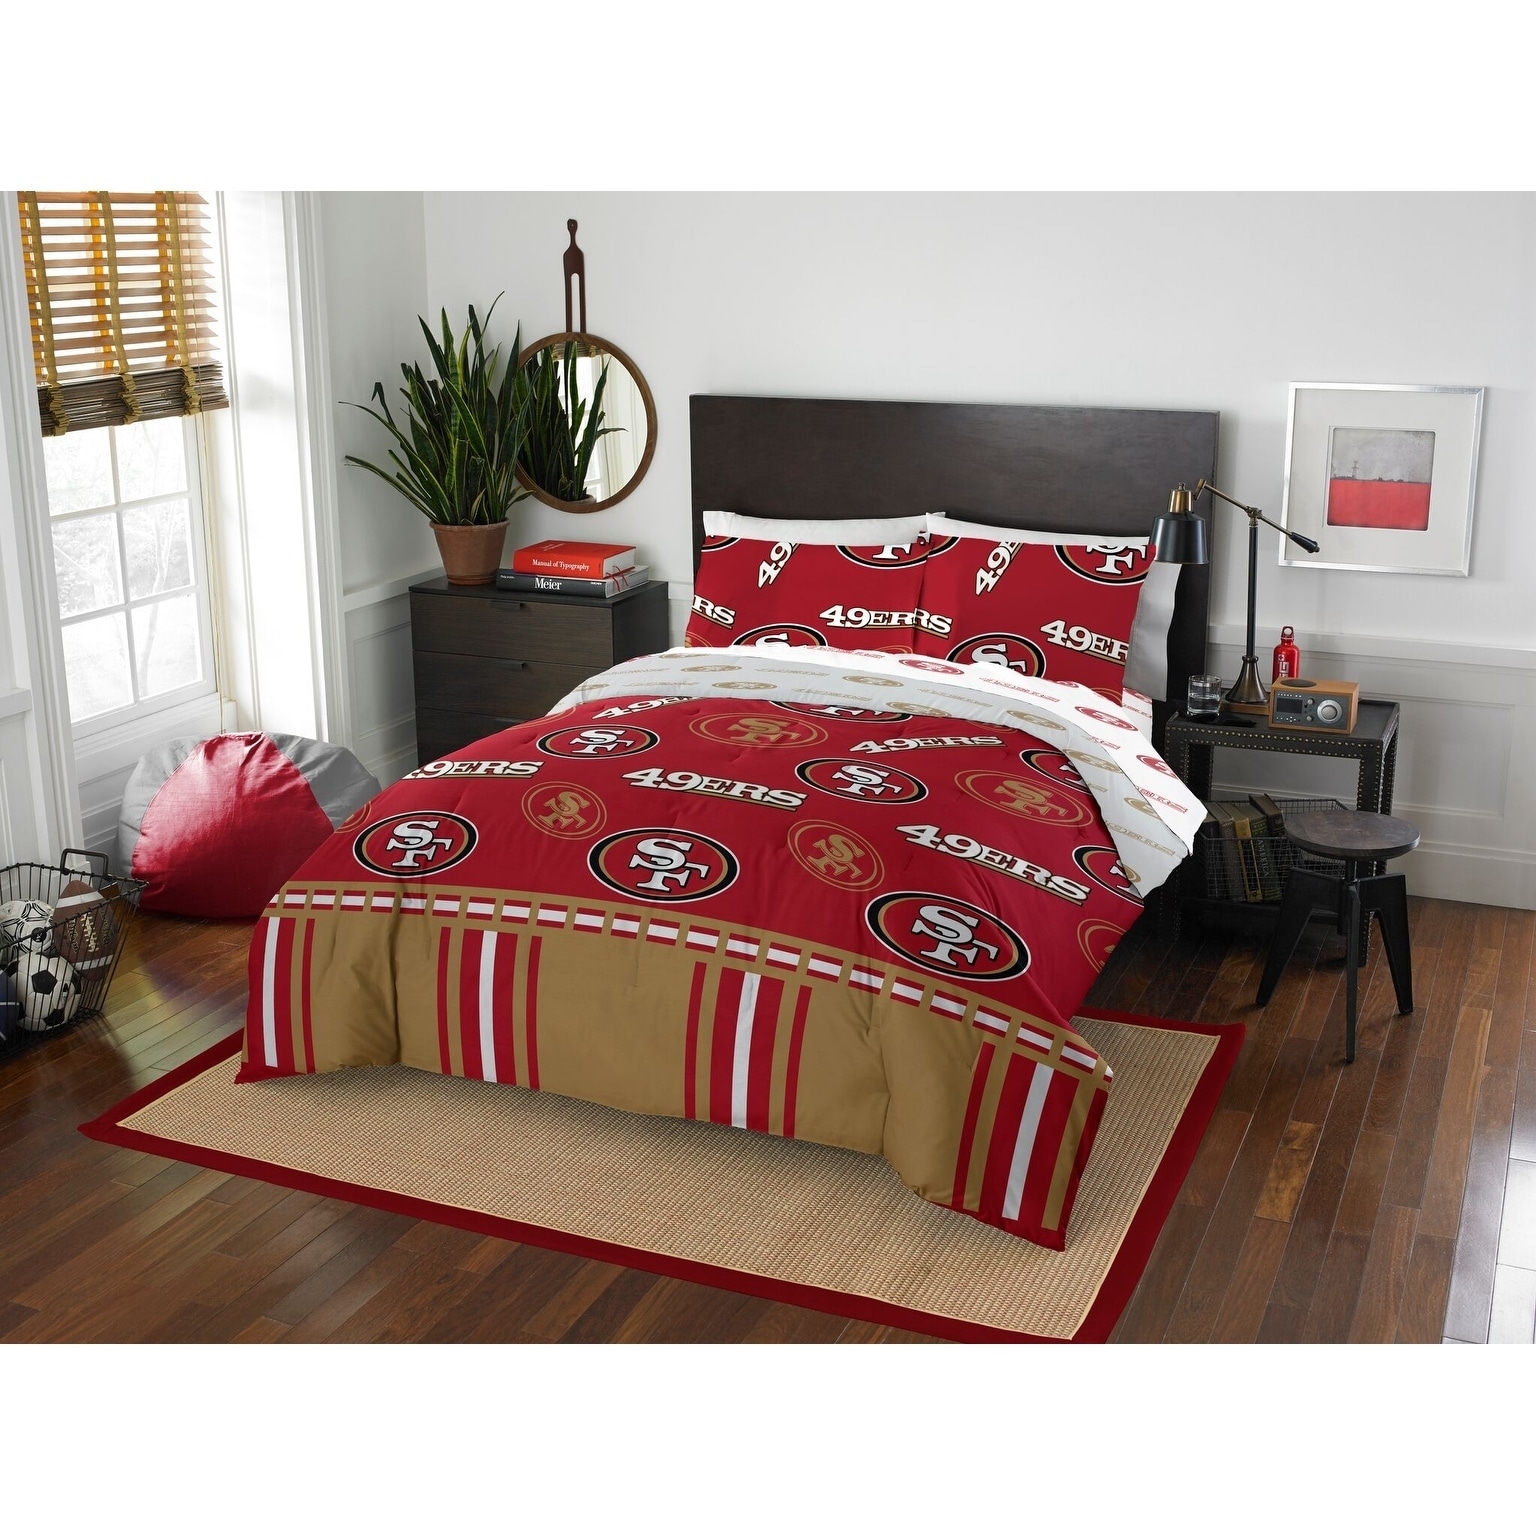 Shop Nfl 875 San Francisco 49ers Queen Bed In A Bag Set On Sale